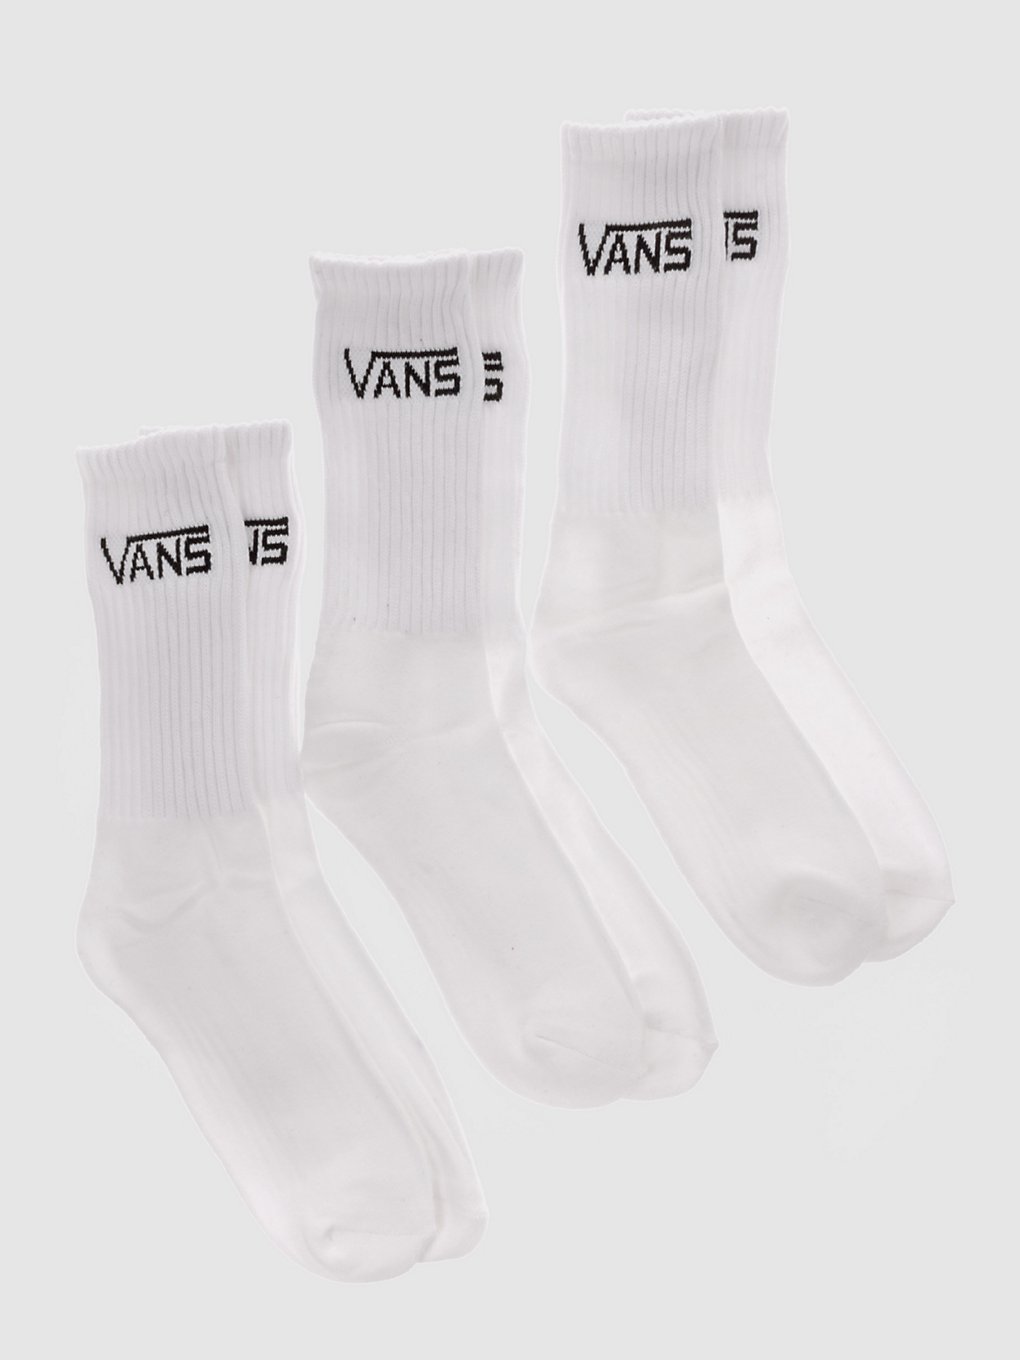 Vans Classic Crew (6.5-9) Socken white kaufen